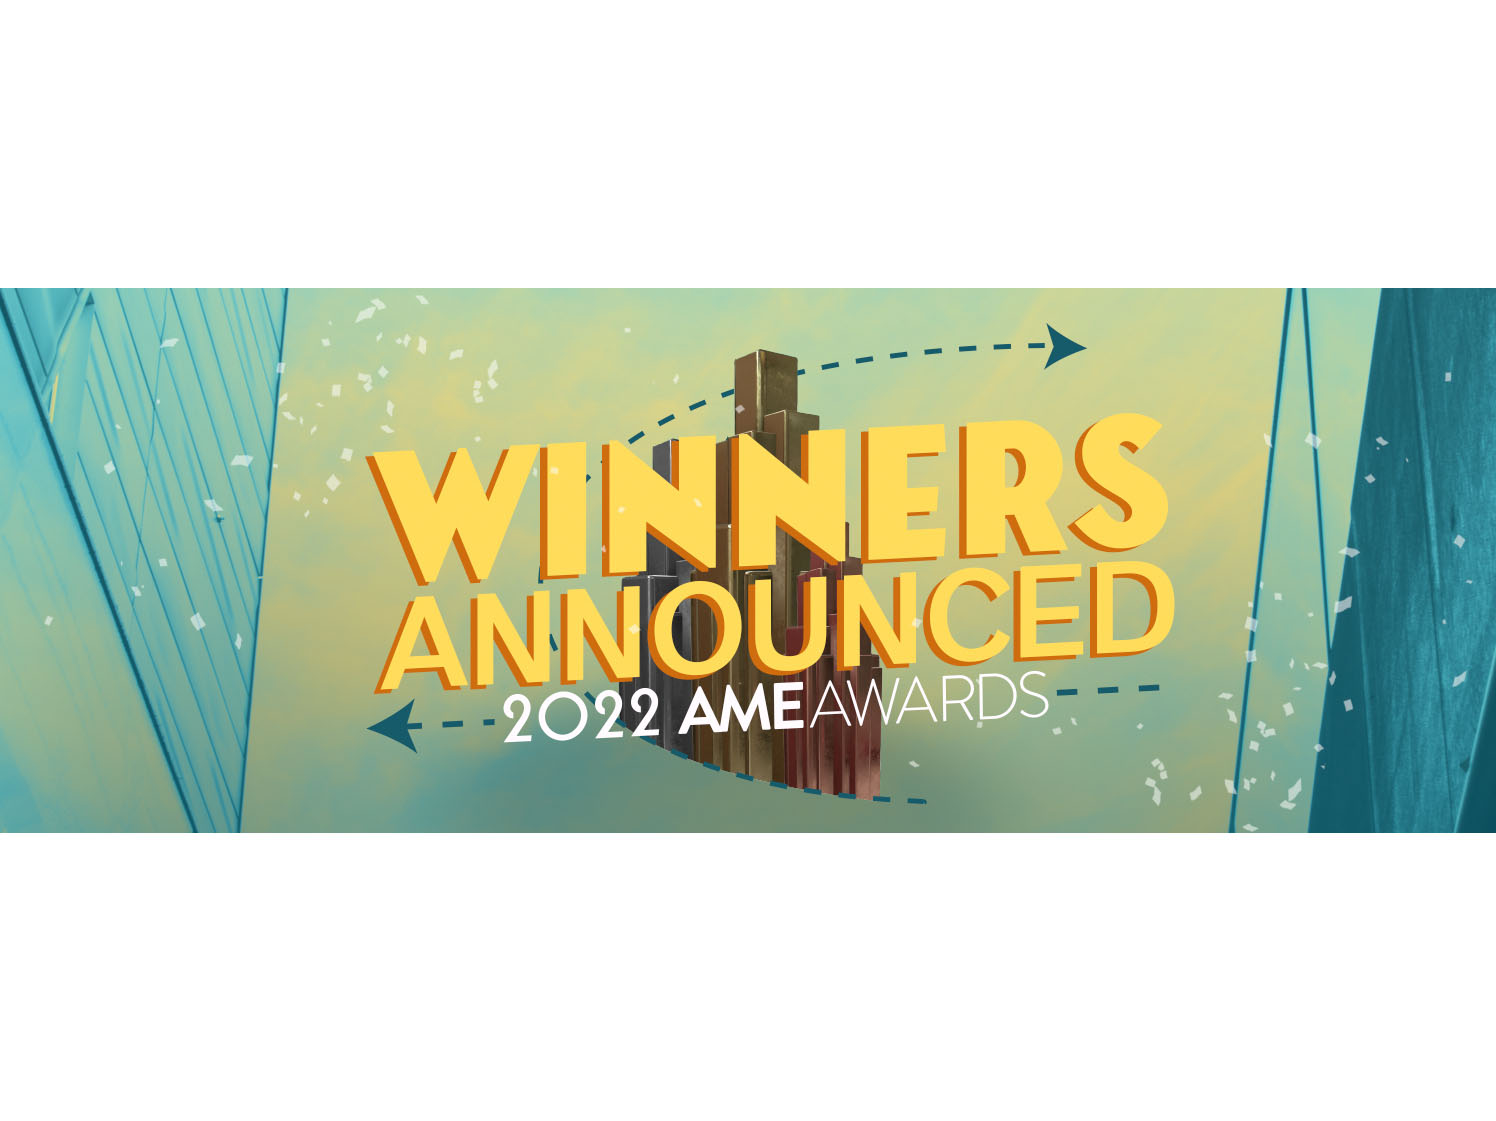 AME Awards' winners announced and Havas ME earns a regional Platinum